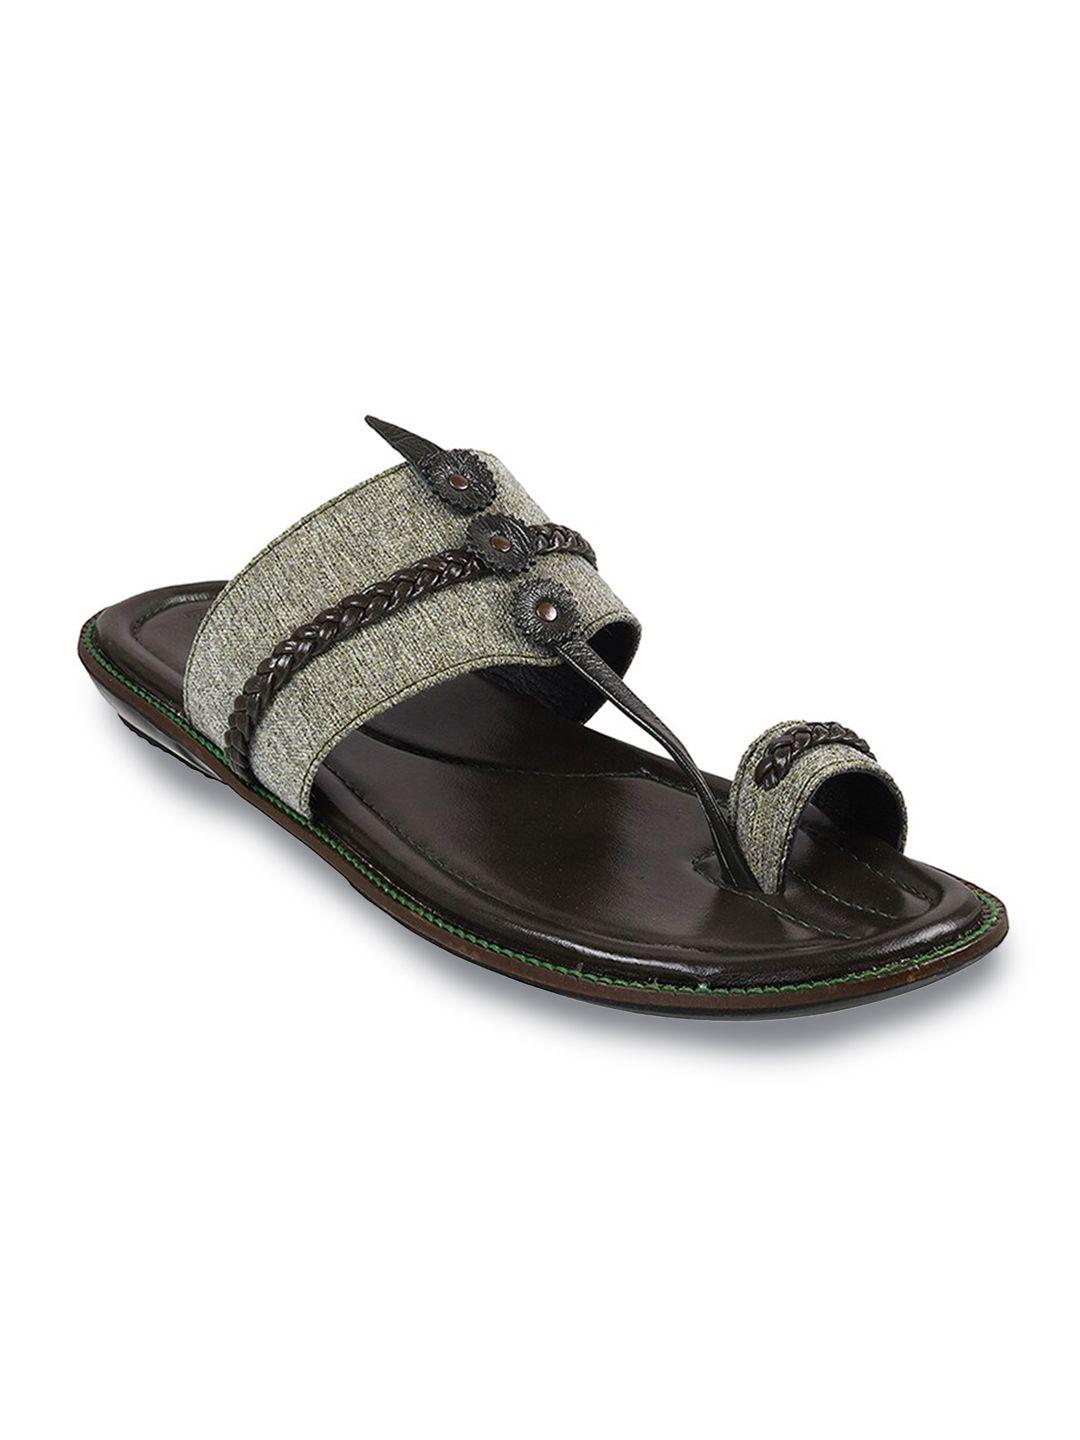 mochi men open one toe comfort sandals